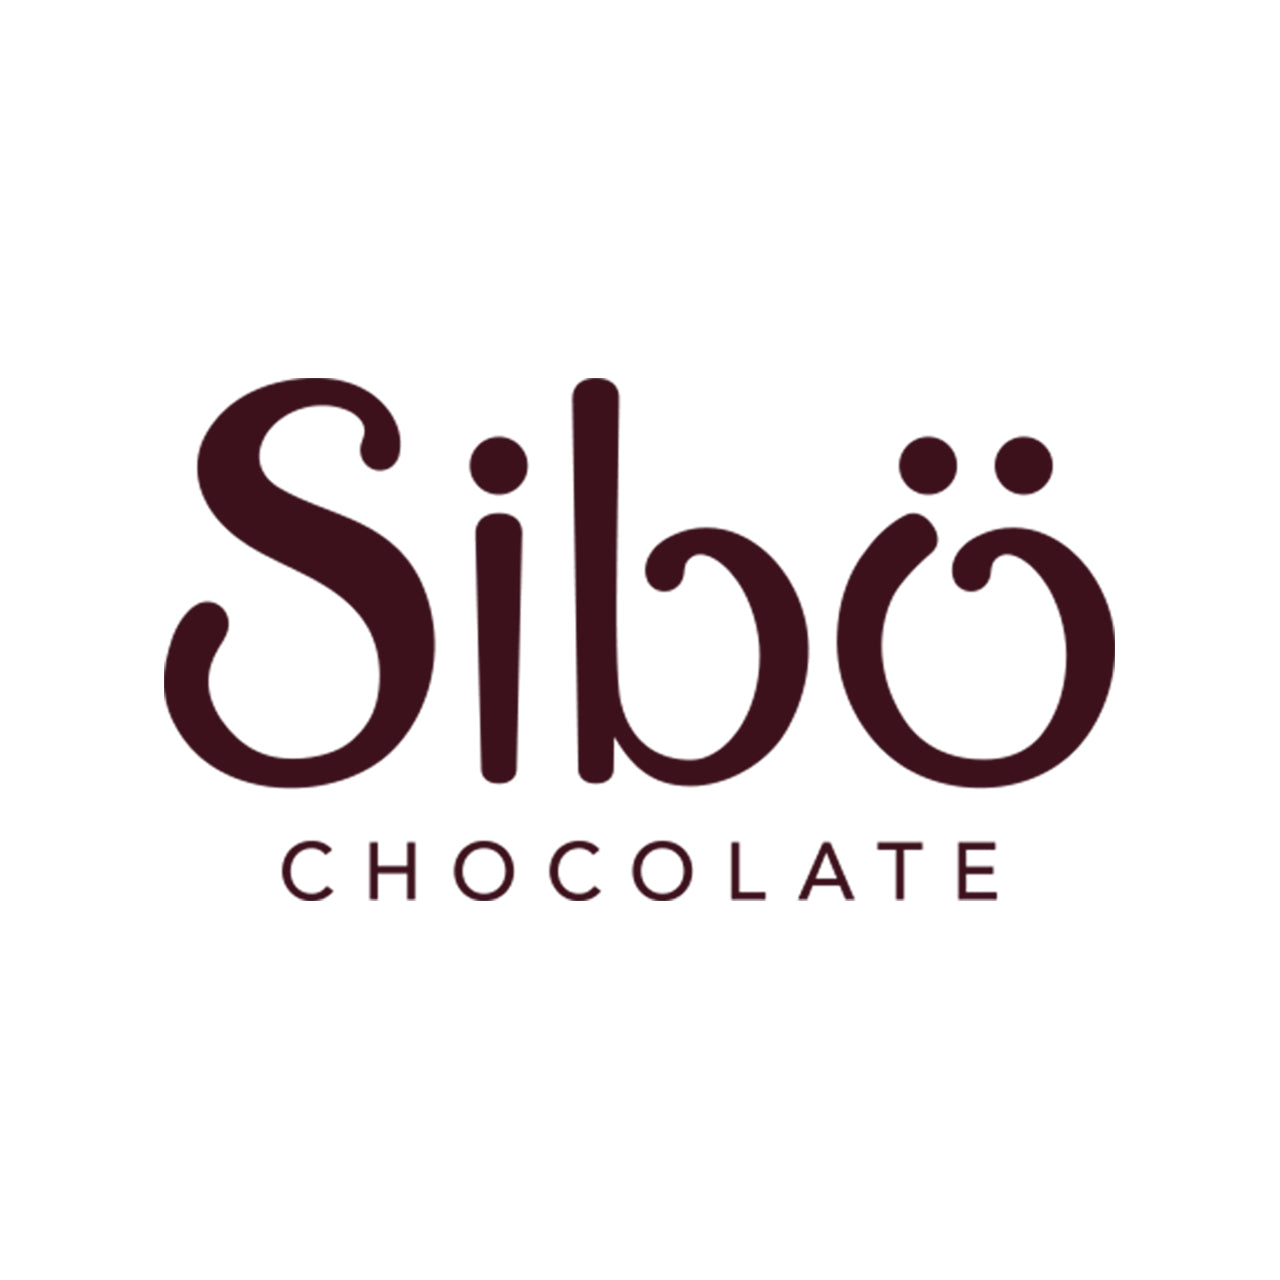 Sibu Chocolate シブチョコレート セサミトフィー